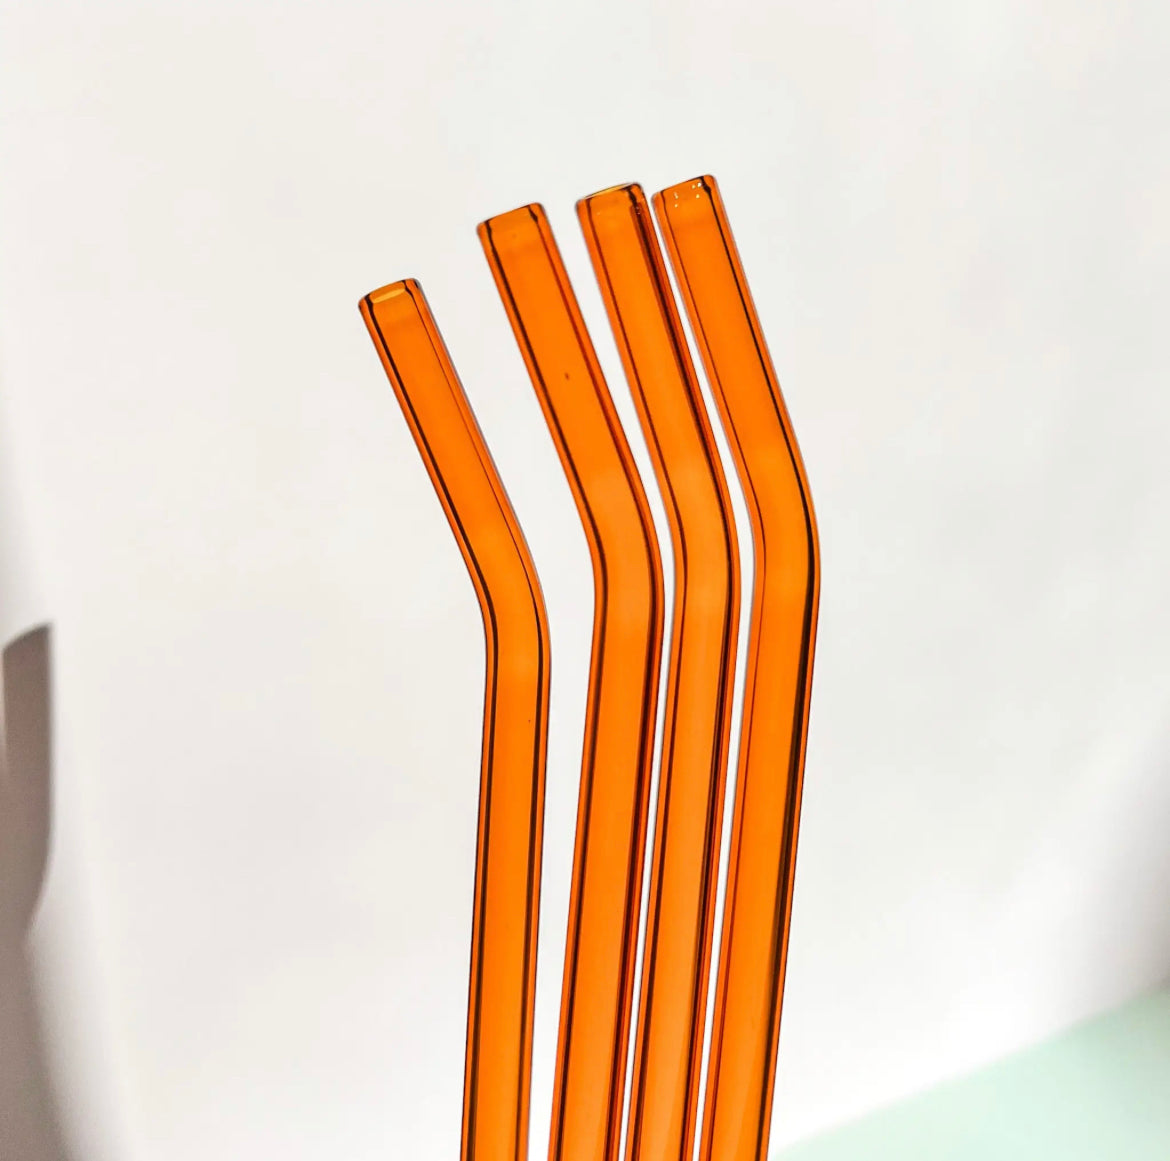 Orange glass straws